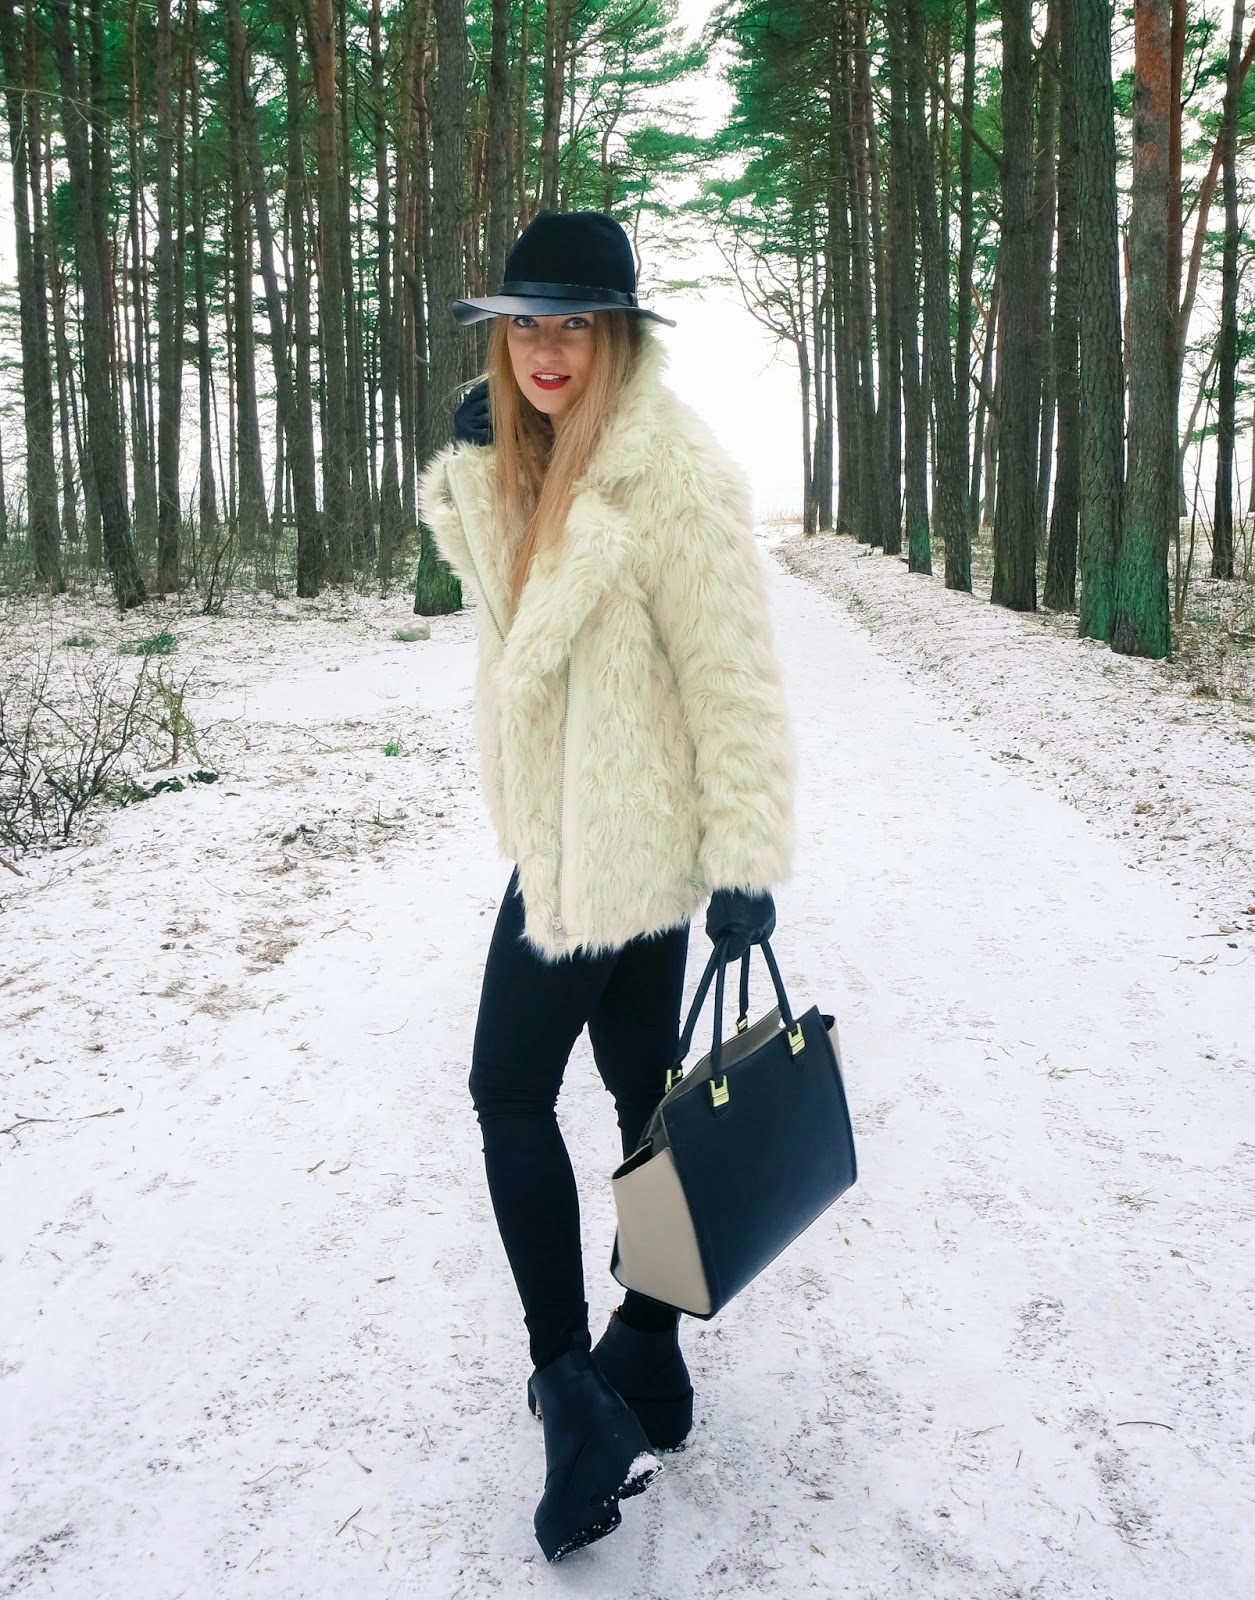 The pleasures of winter | Bergie's style closet | Bloglovin’